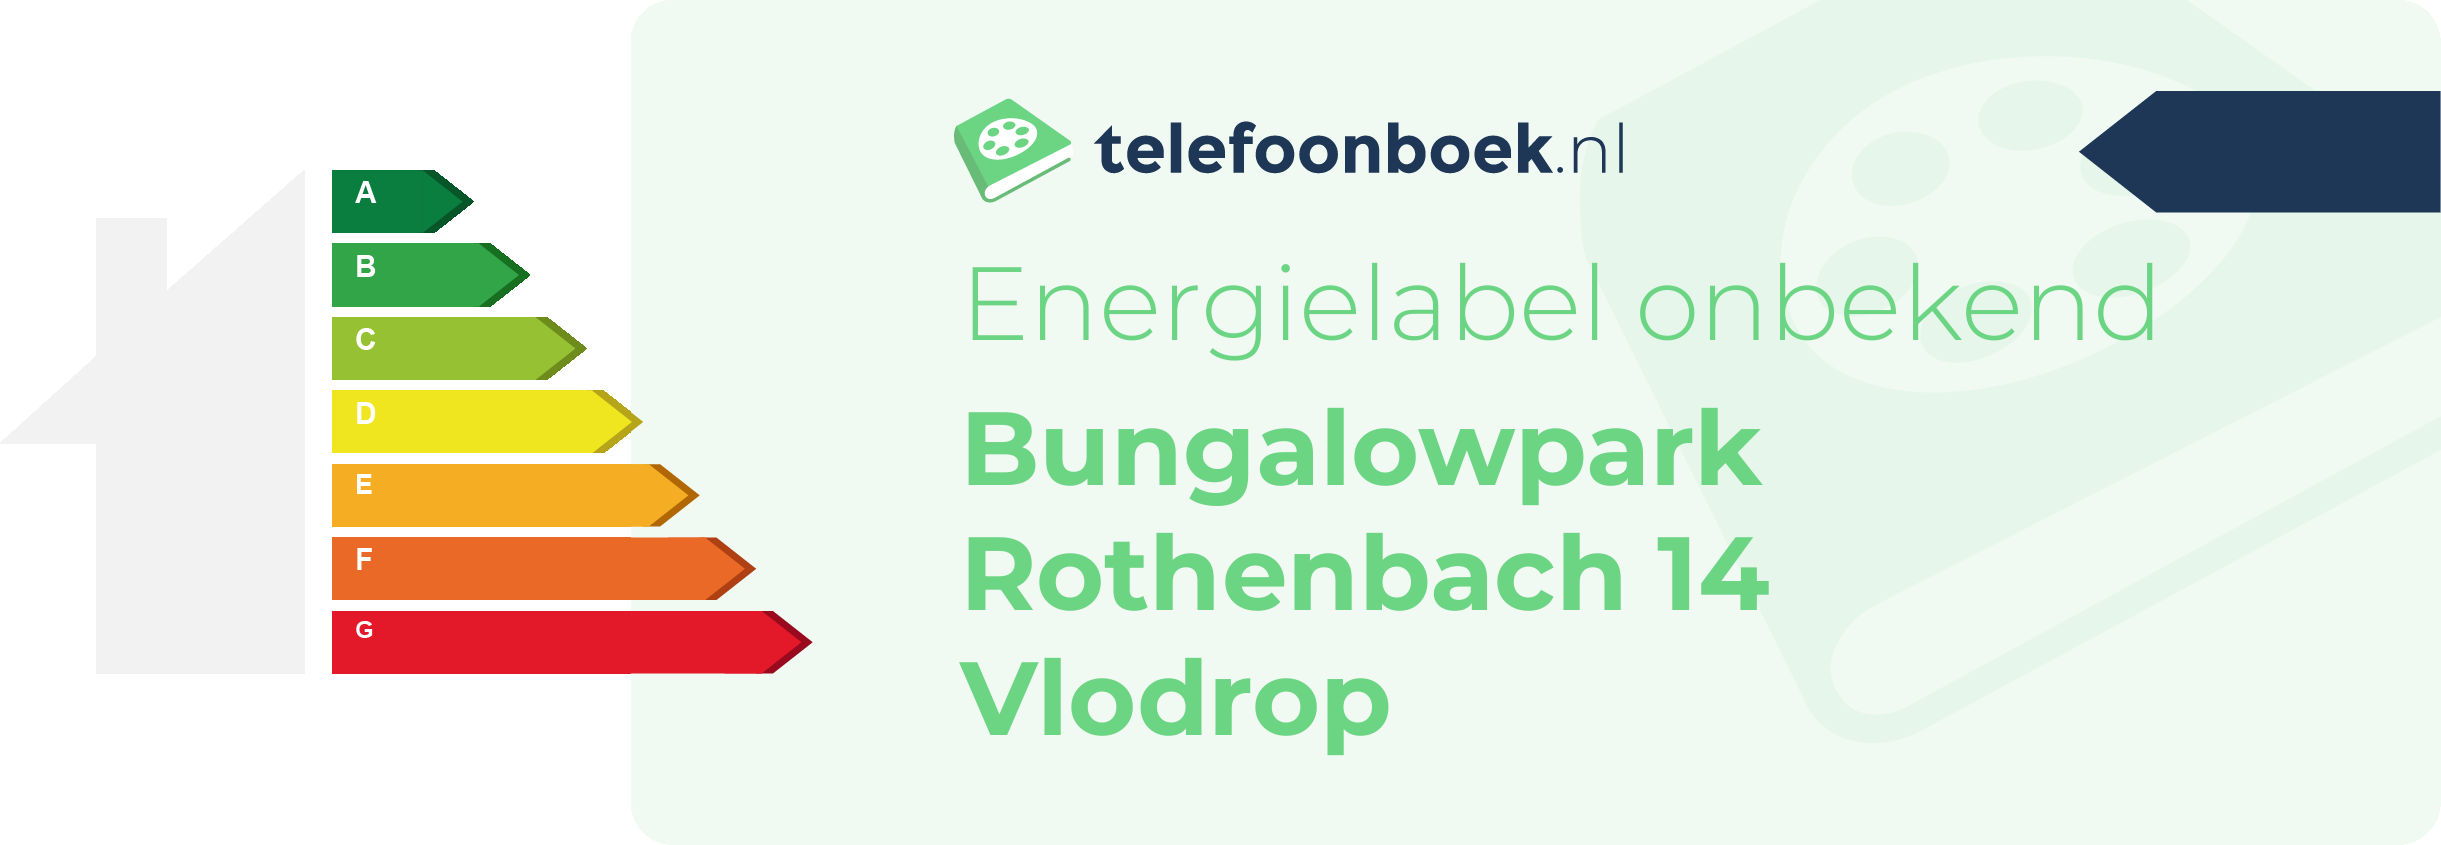 Energielabel Bungalowpark Rothenbach 14 Vlodrop